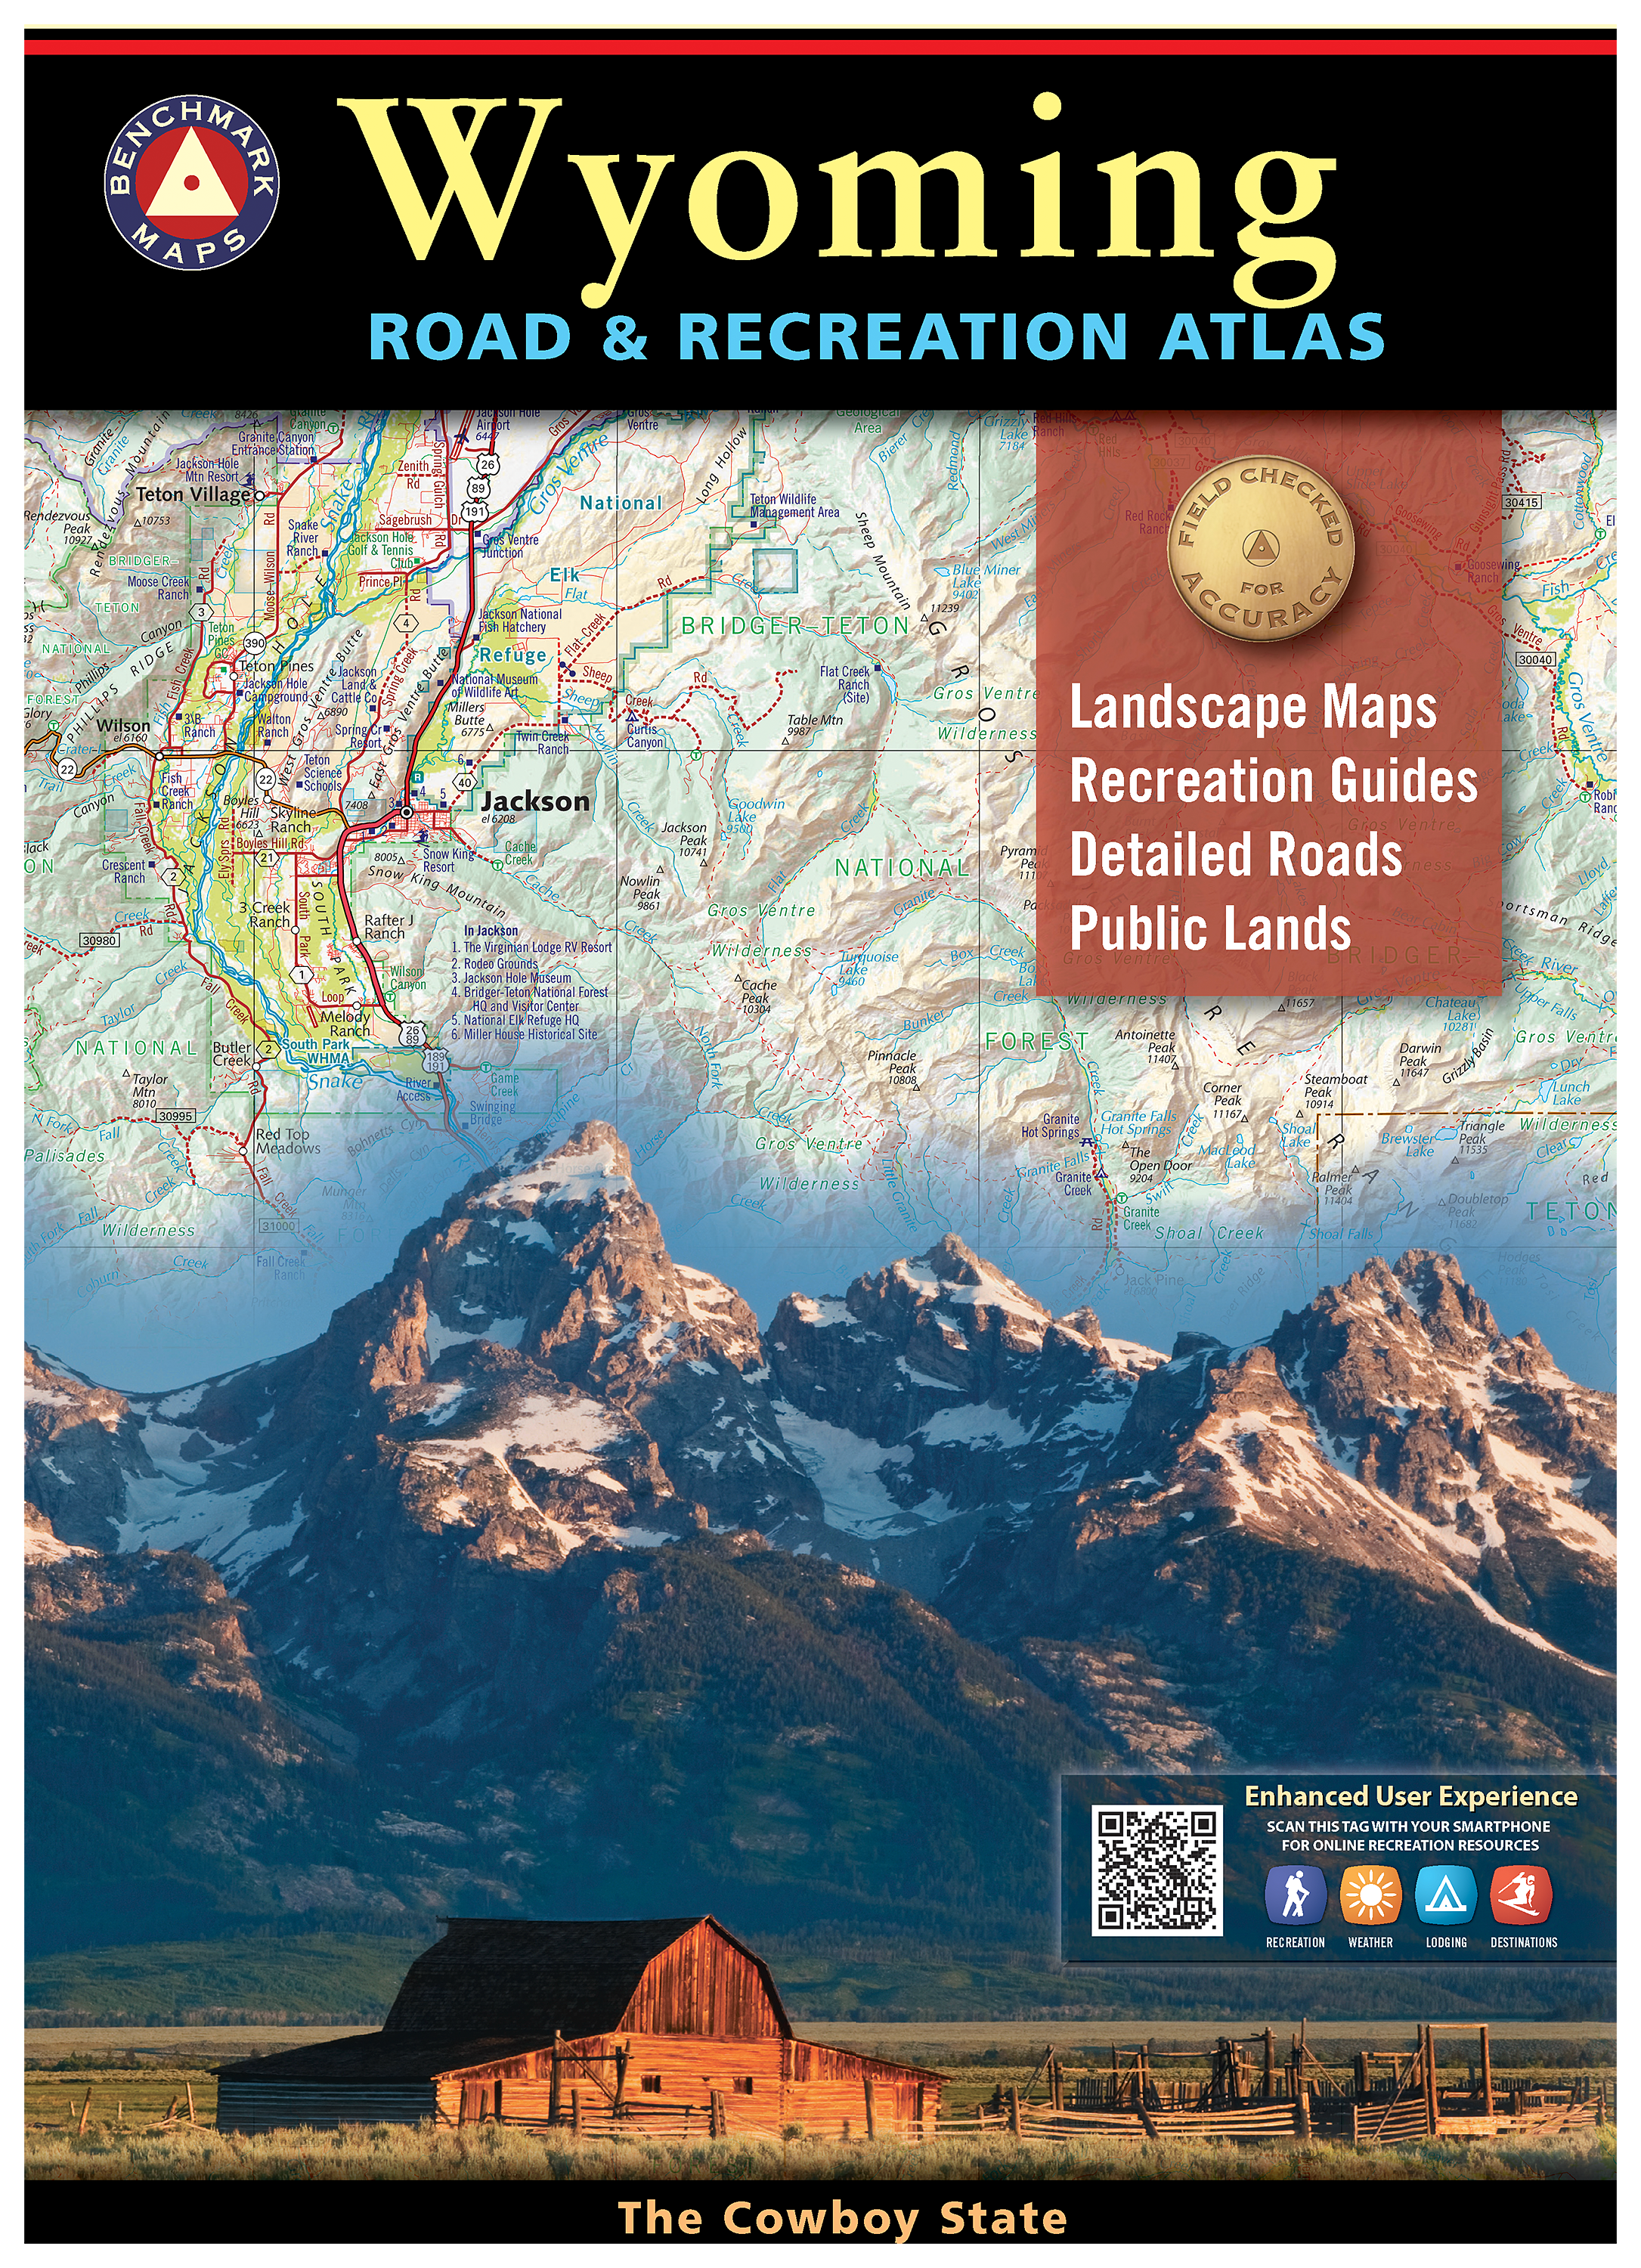 Benchmark Maps Road & Recreation Atlas - Wyoming